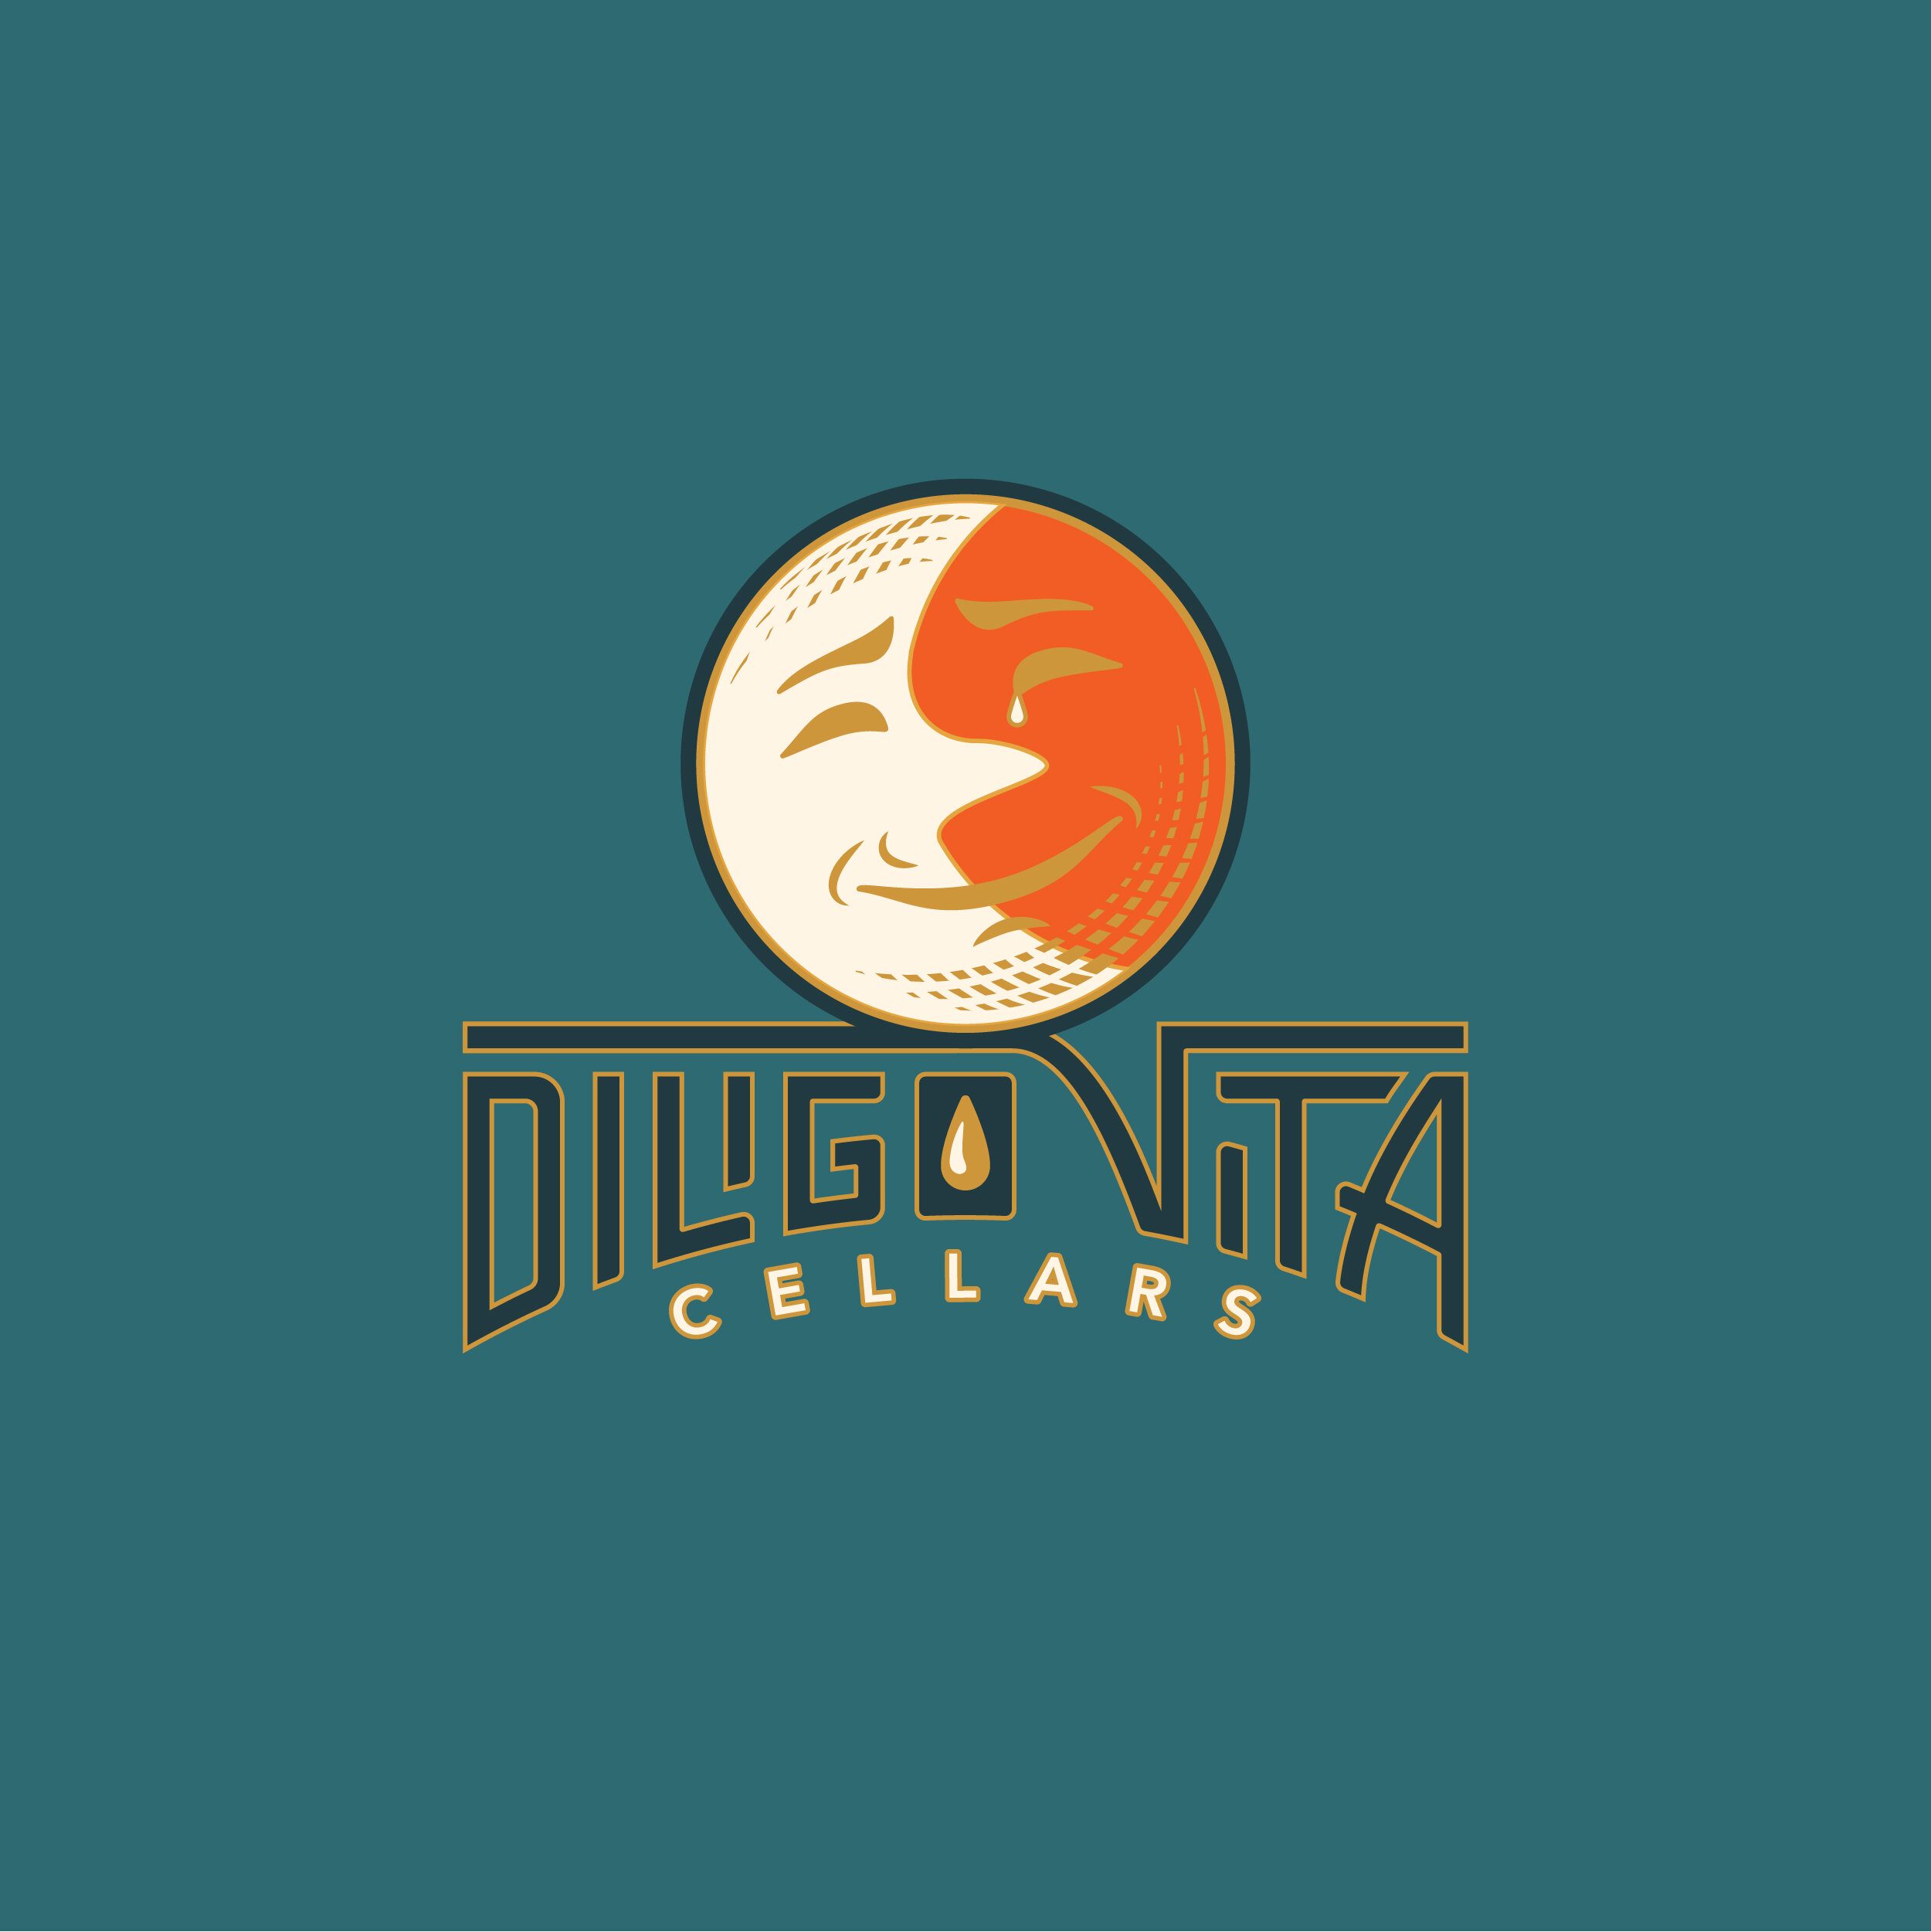 DiligoVita-Spirits-Branding_Primary Logo.jpg